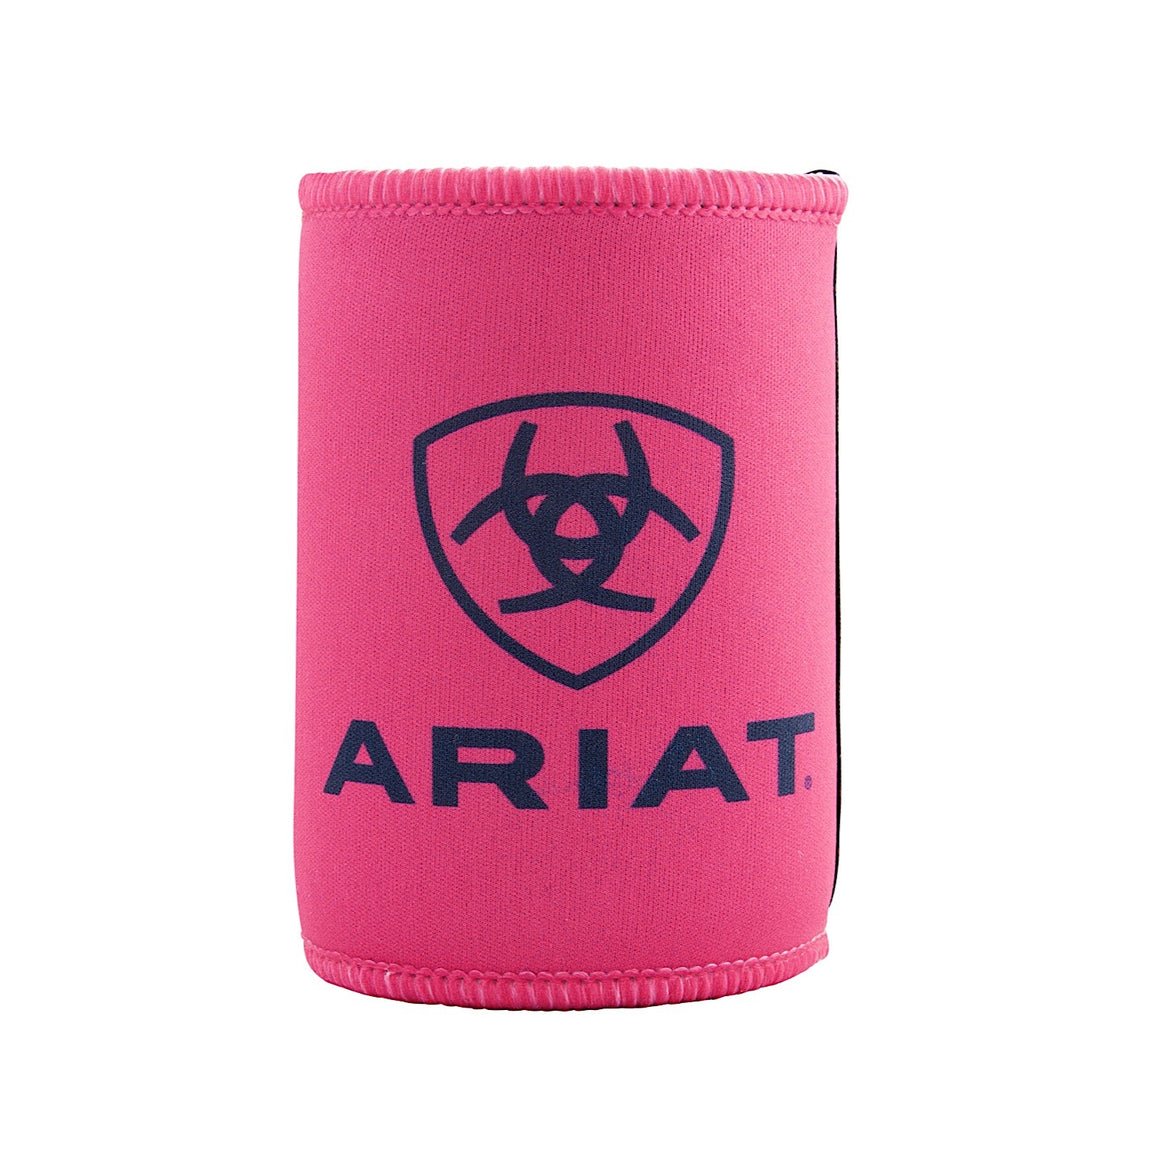 Ariat Stubby Cooler Pink/Navy